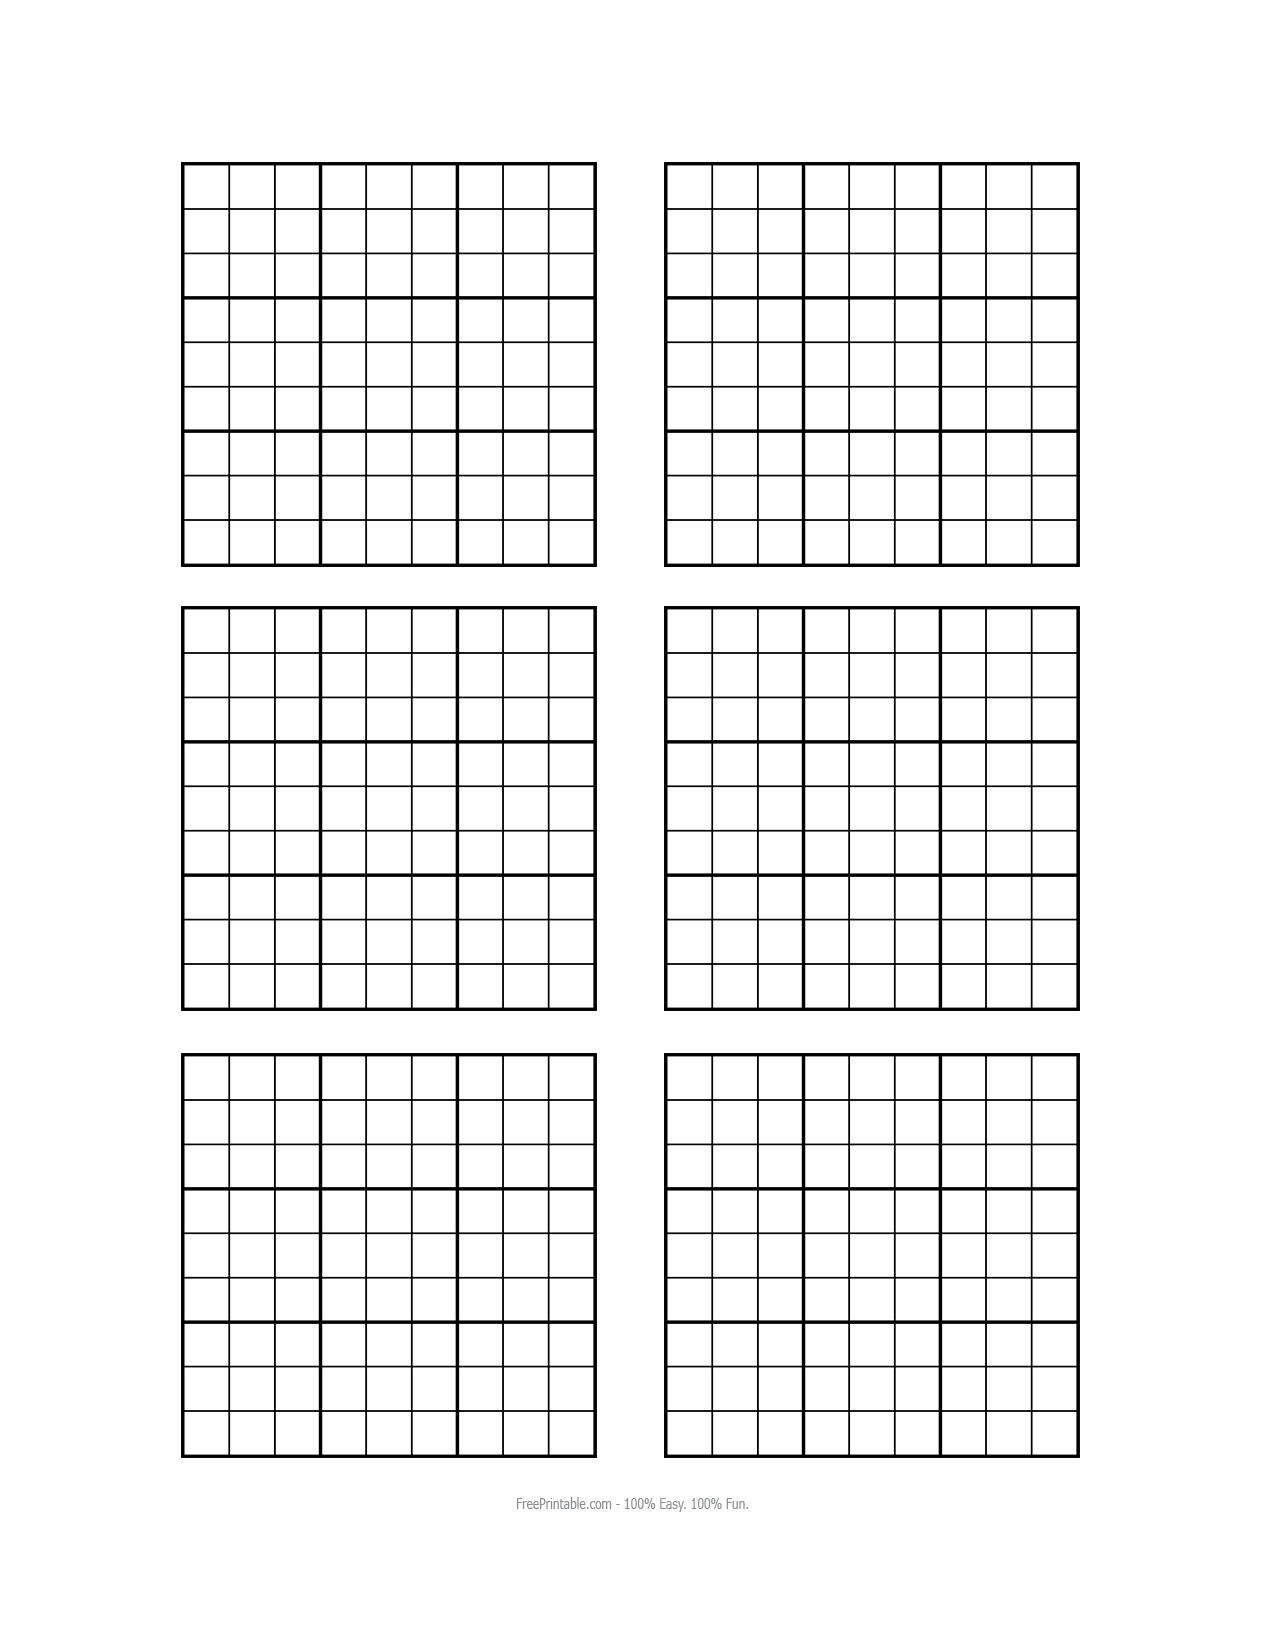 Free Blank Sudoku Printables